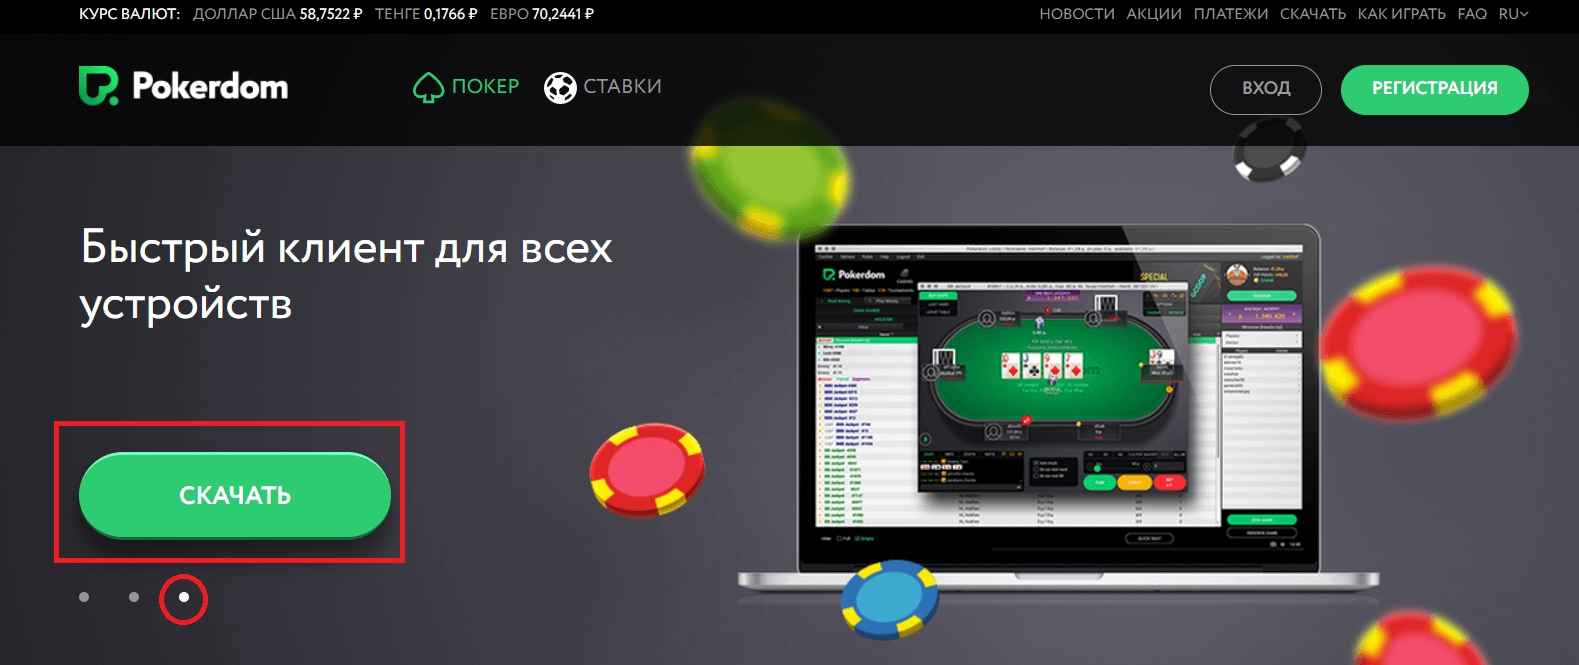 покердом онлайн pokerdom casino play